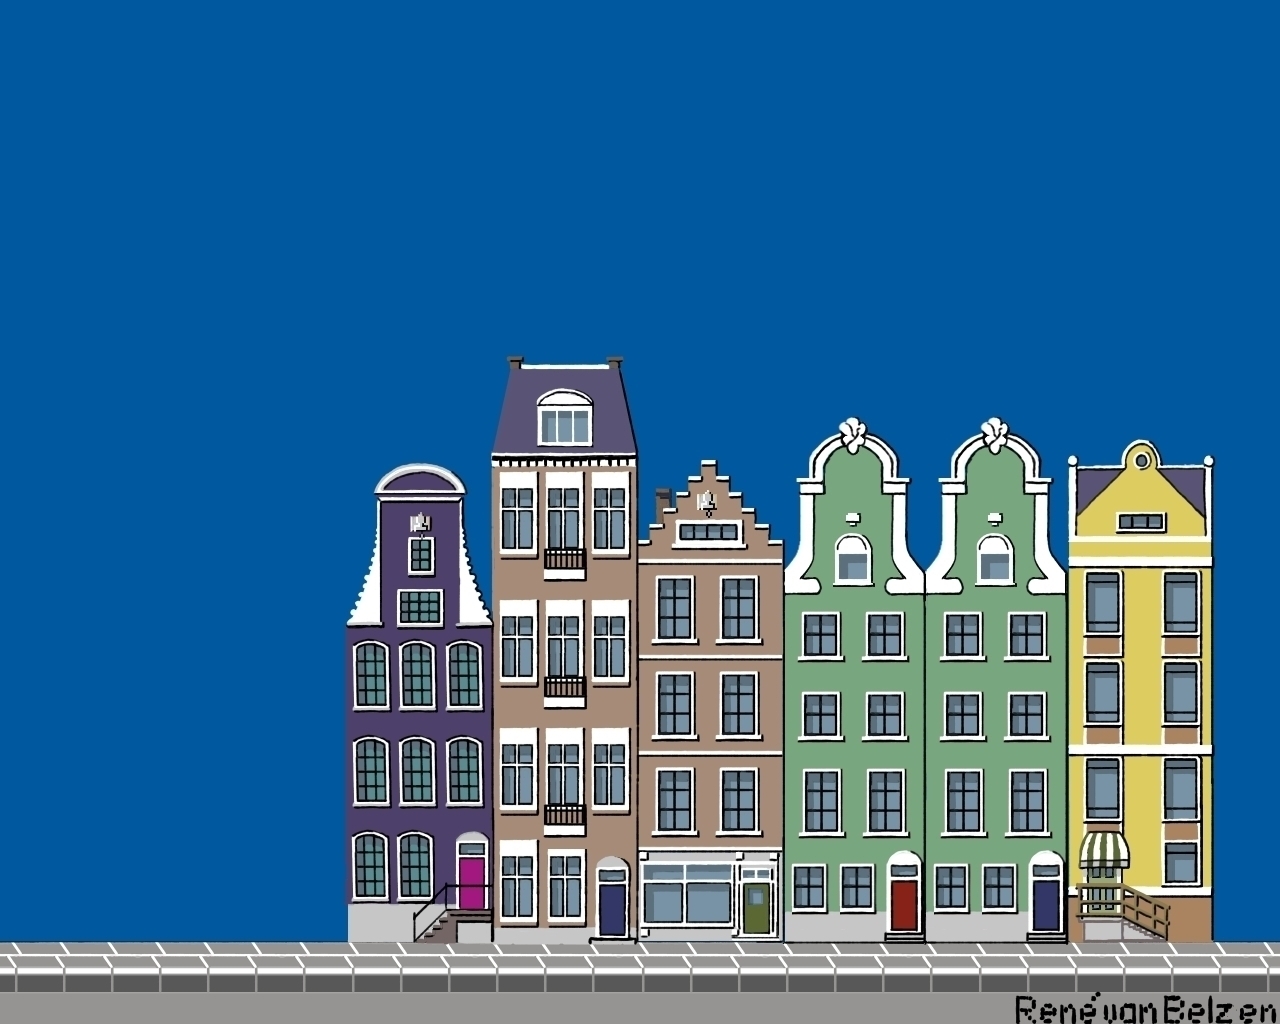 pixel art of merchant townhouses on a blue background